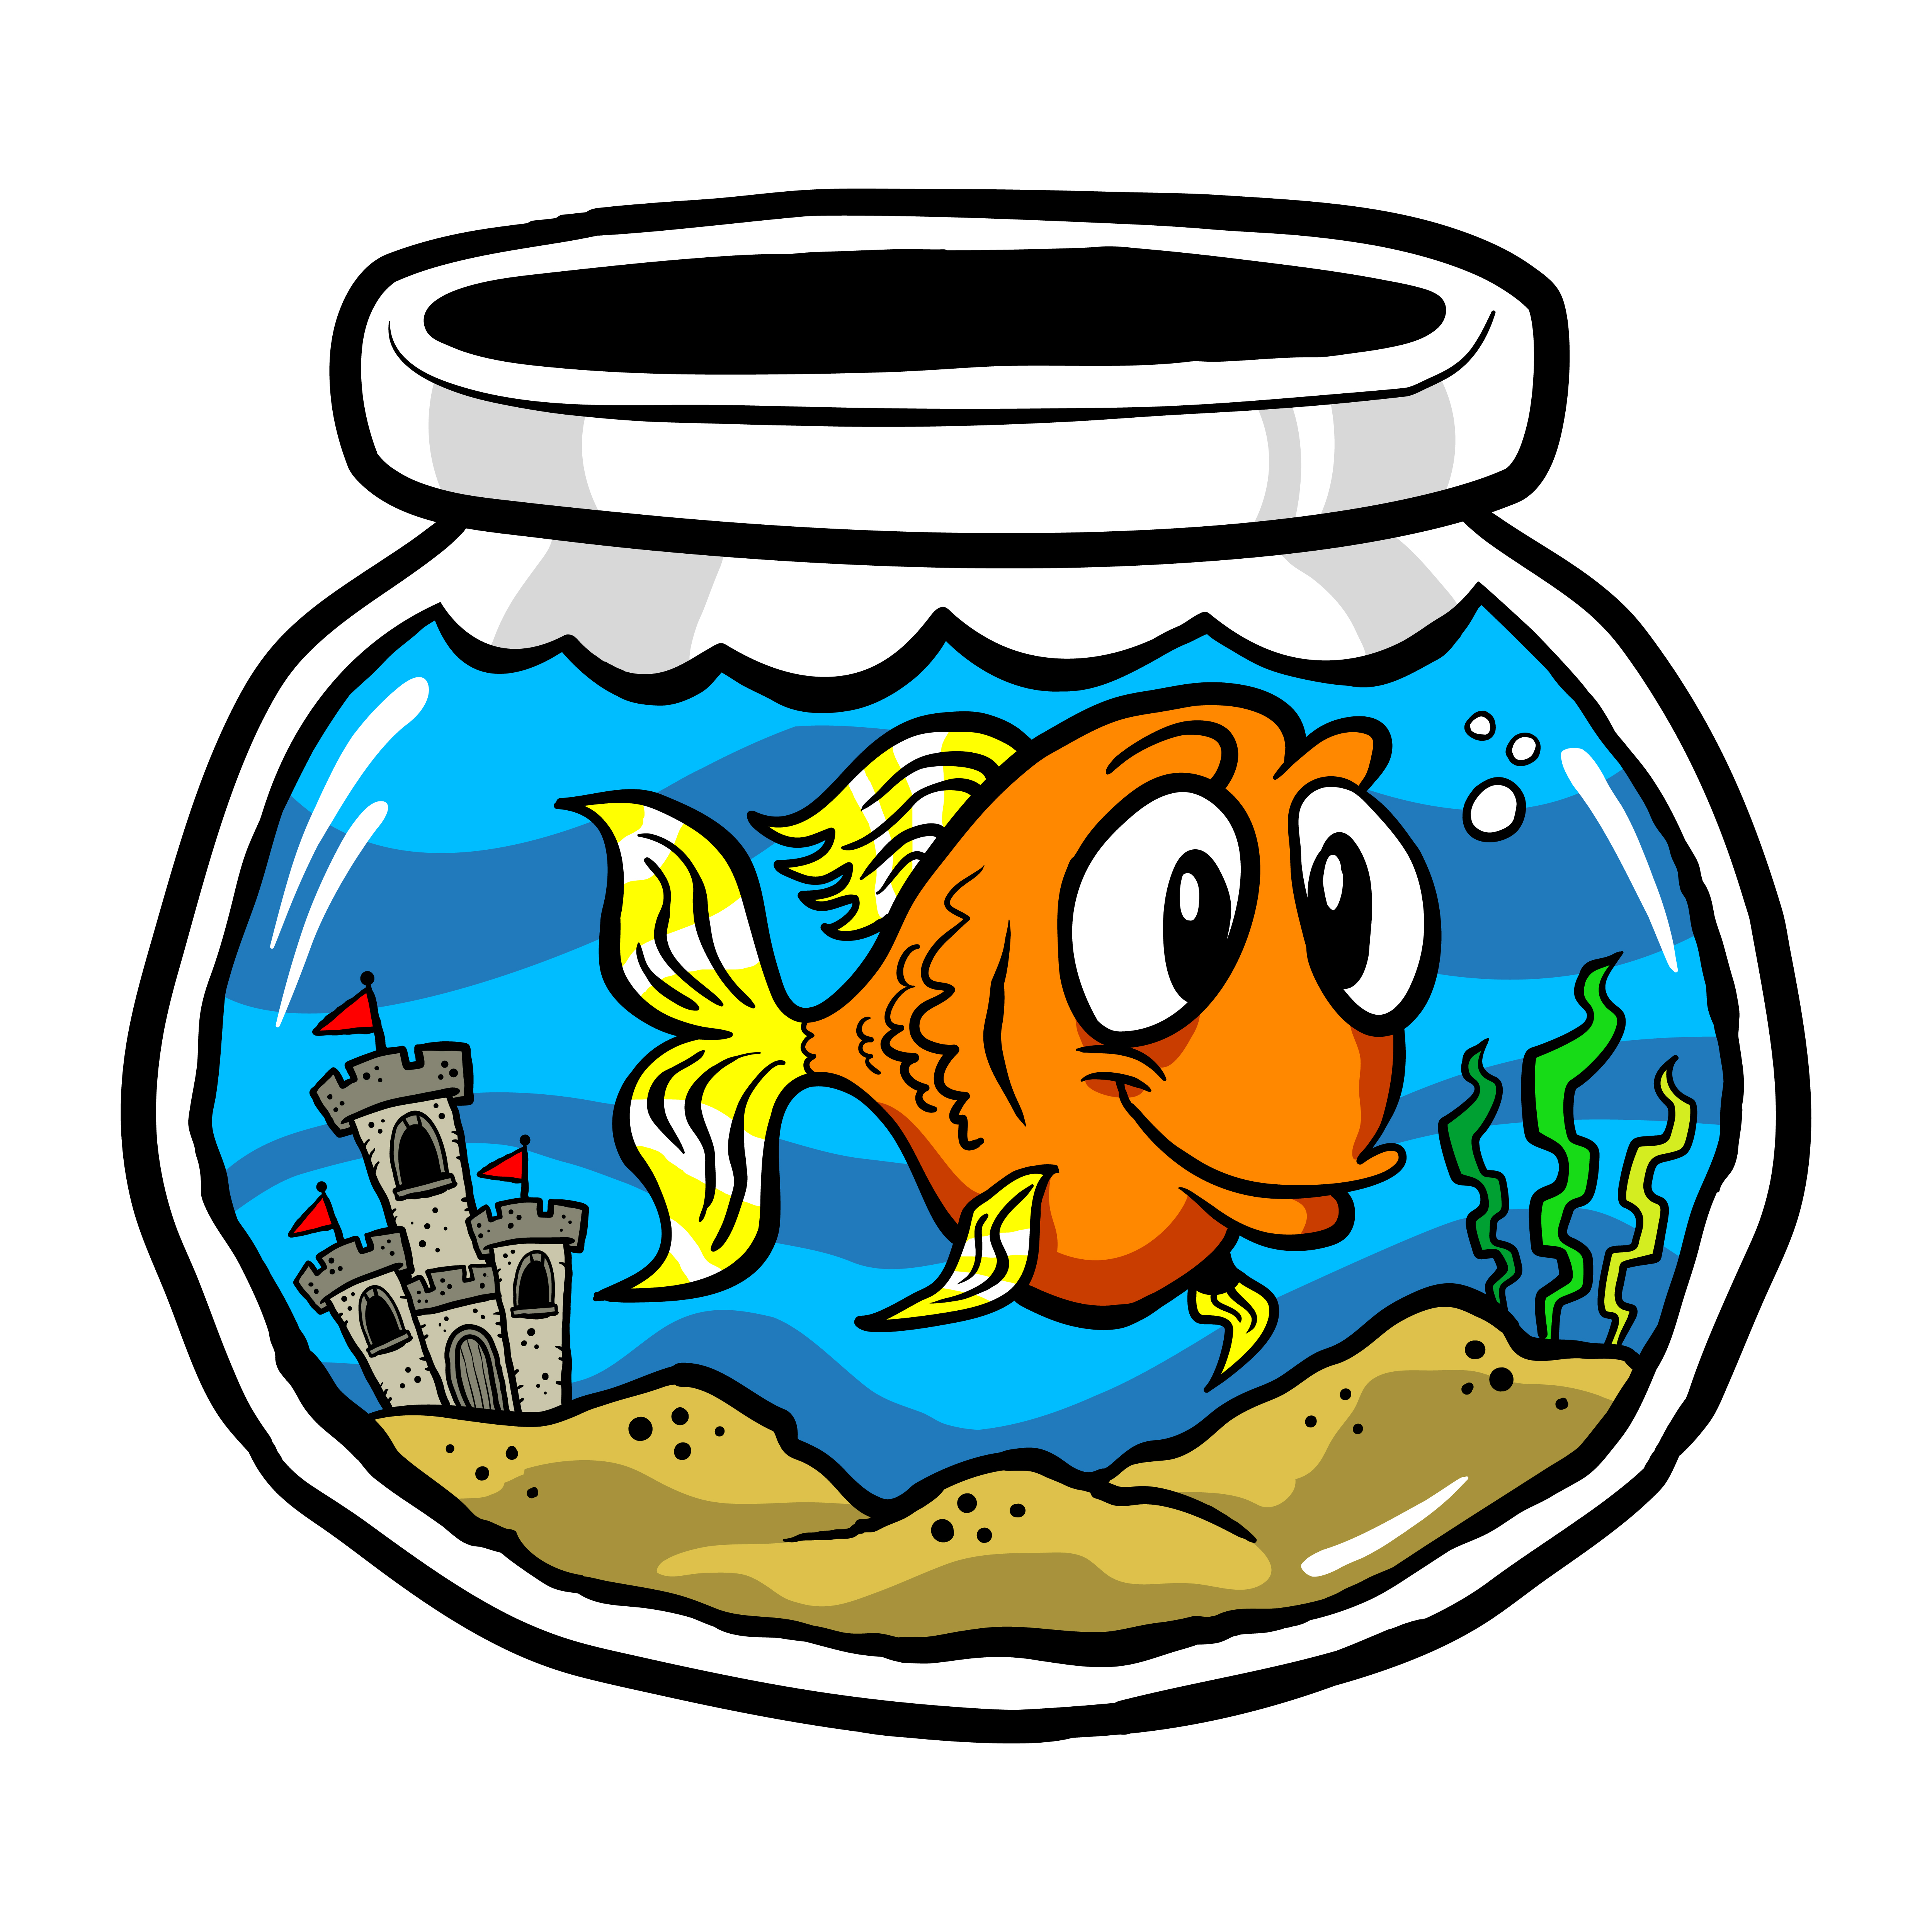 Download Goldfish cartoon vector icon - Download Free Vectors ...